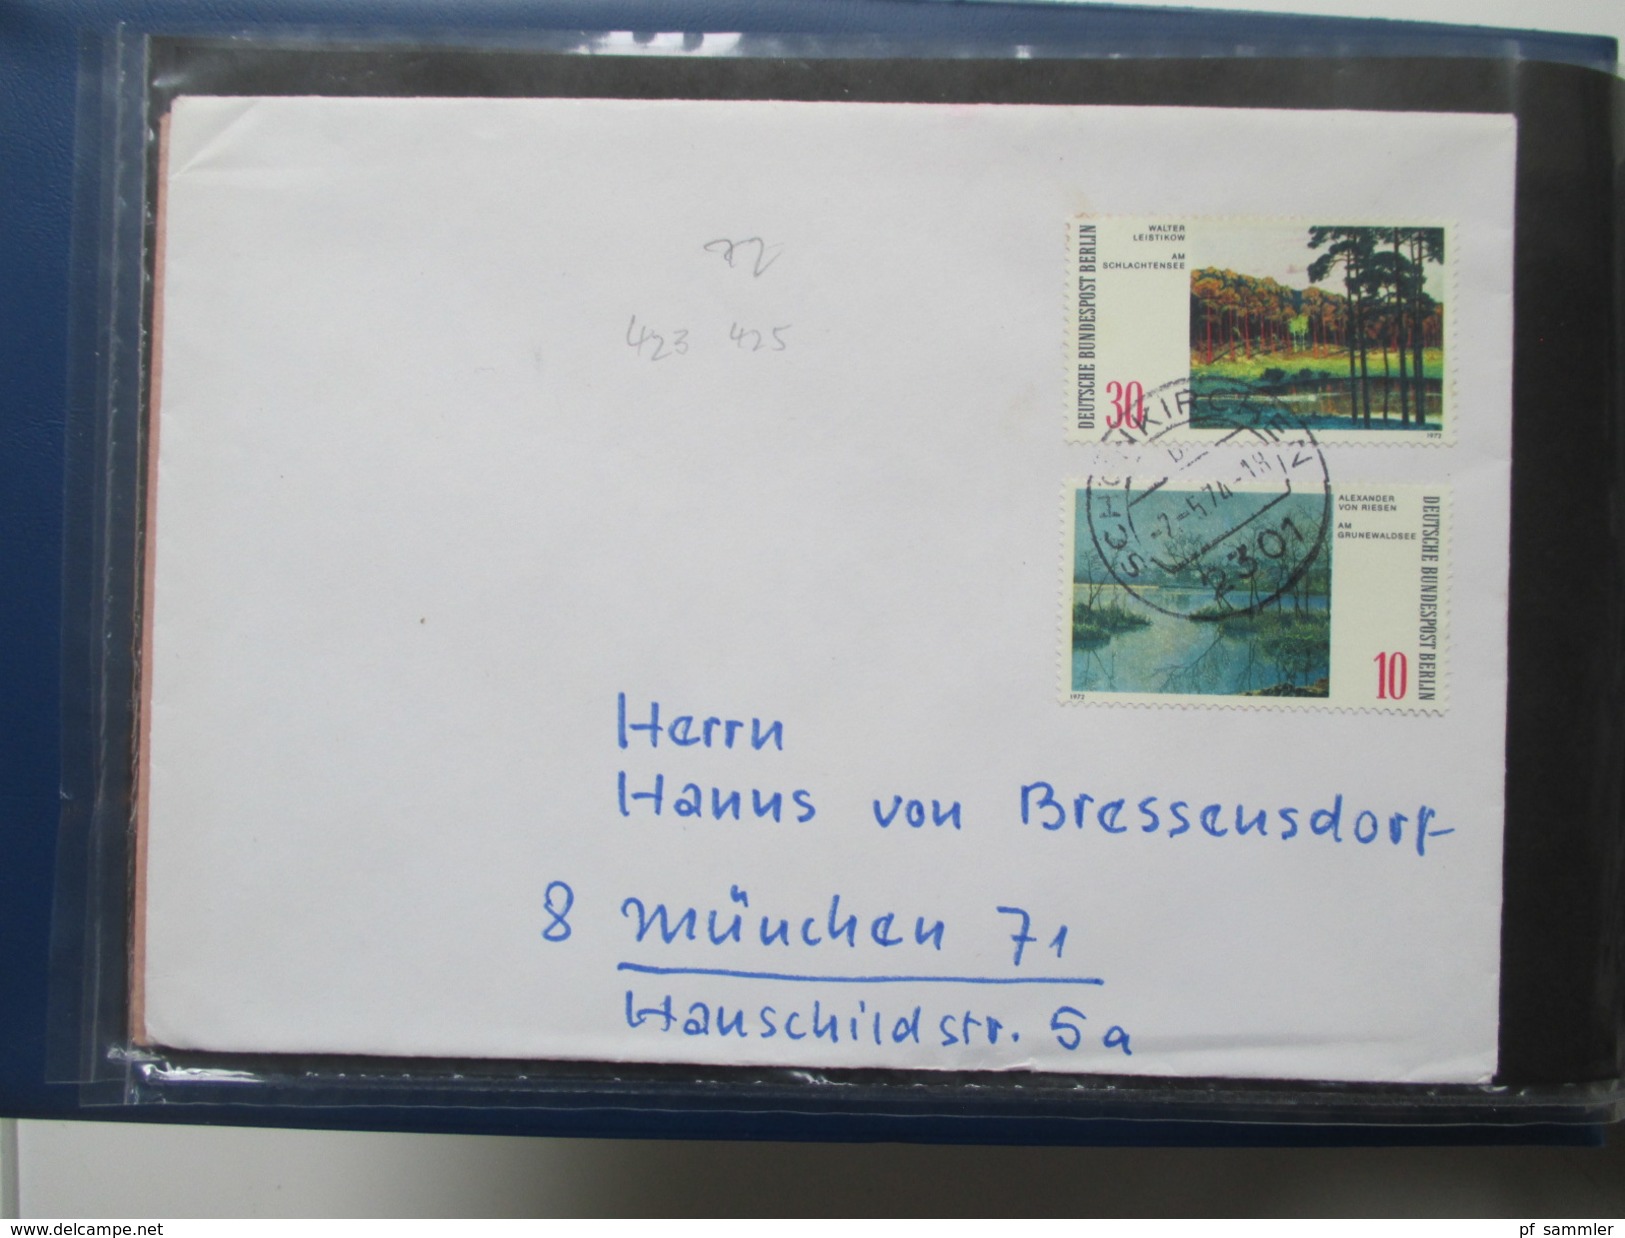 Berlin Belegesammlung 100 Briefe.Bedarf / FDC 1972-1975. Interessante Stücke / Stöberposten! Bund / Berlin Stempel. ATM - Collections (en Albums)